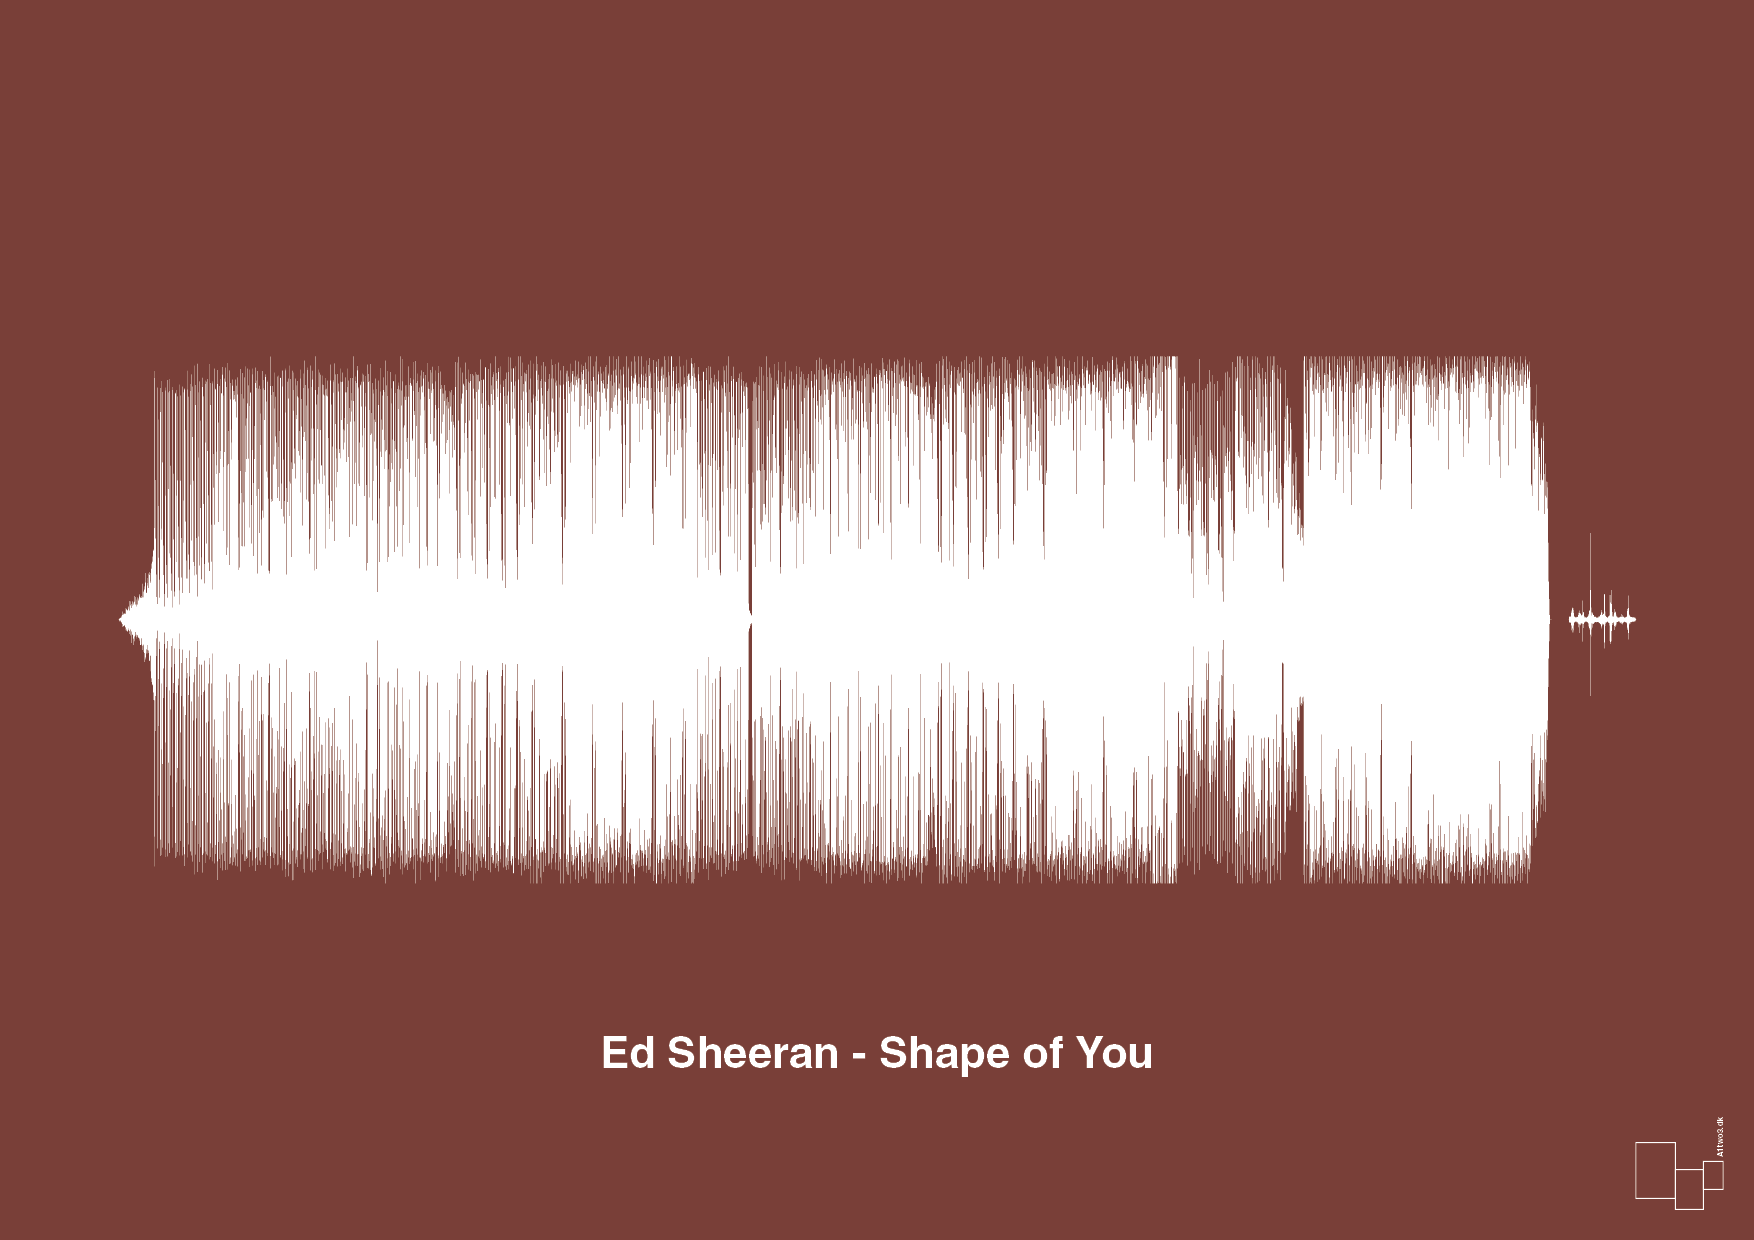 ed sheeran - shape of you - Plakat med Musik i Red Pepper